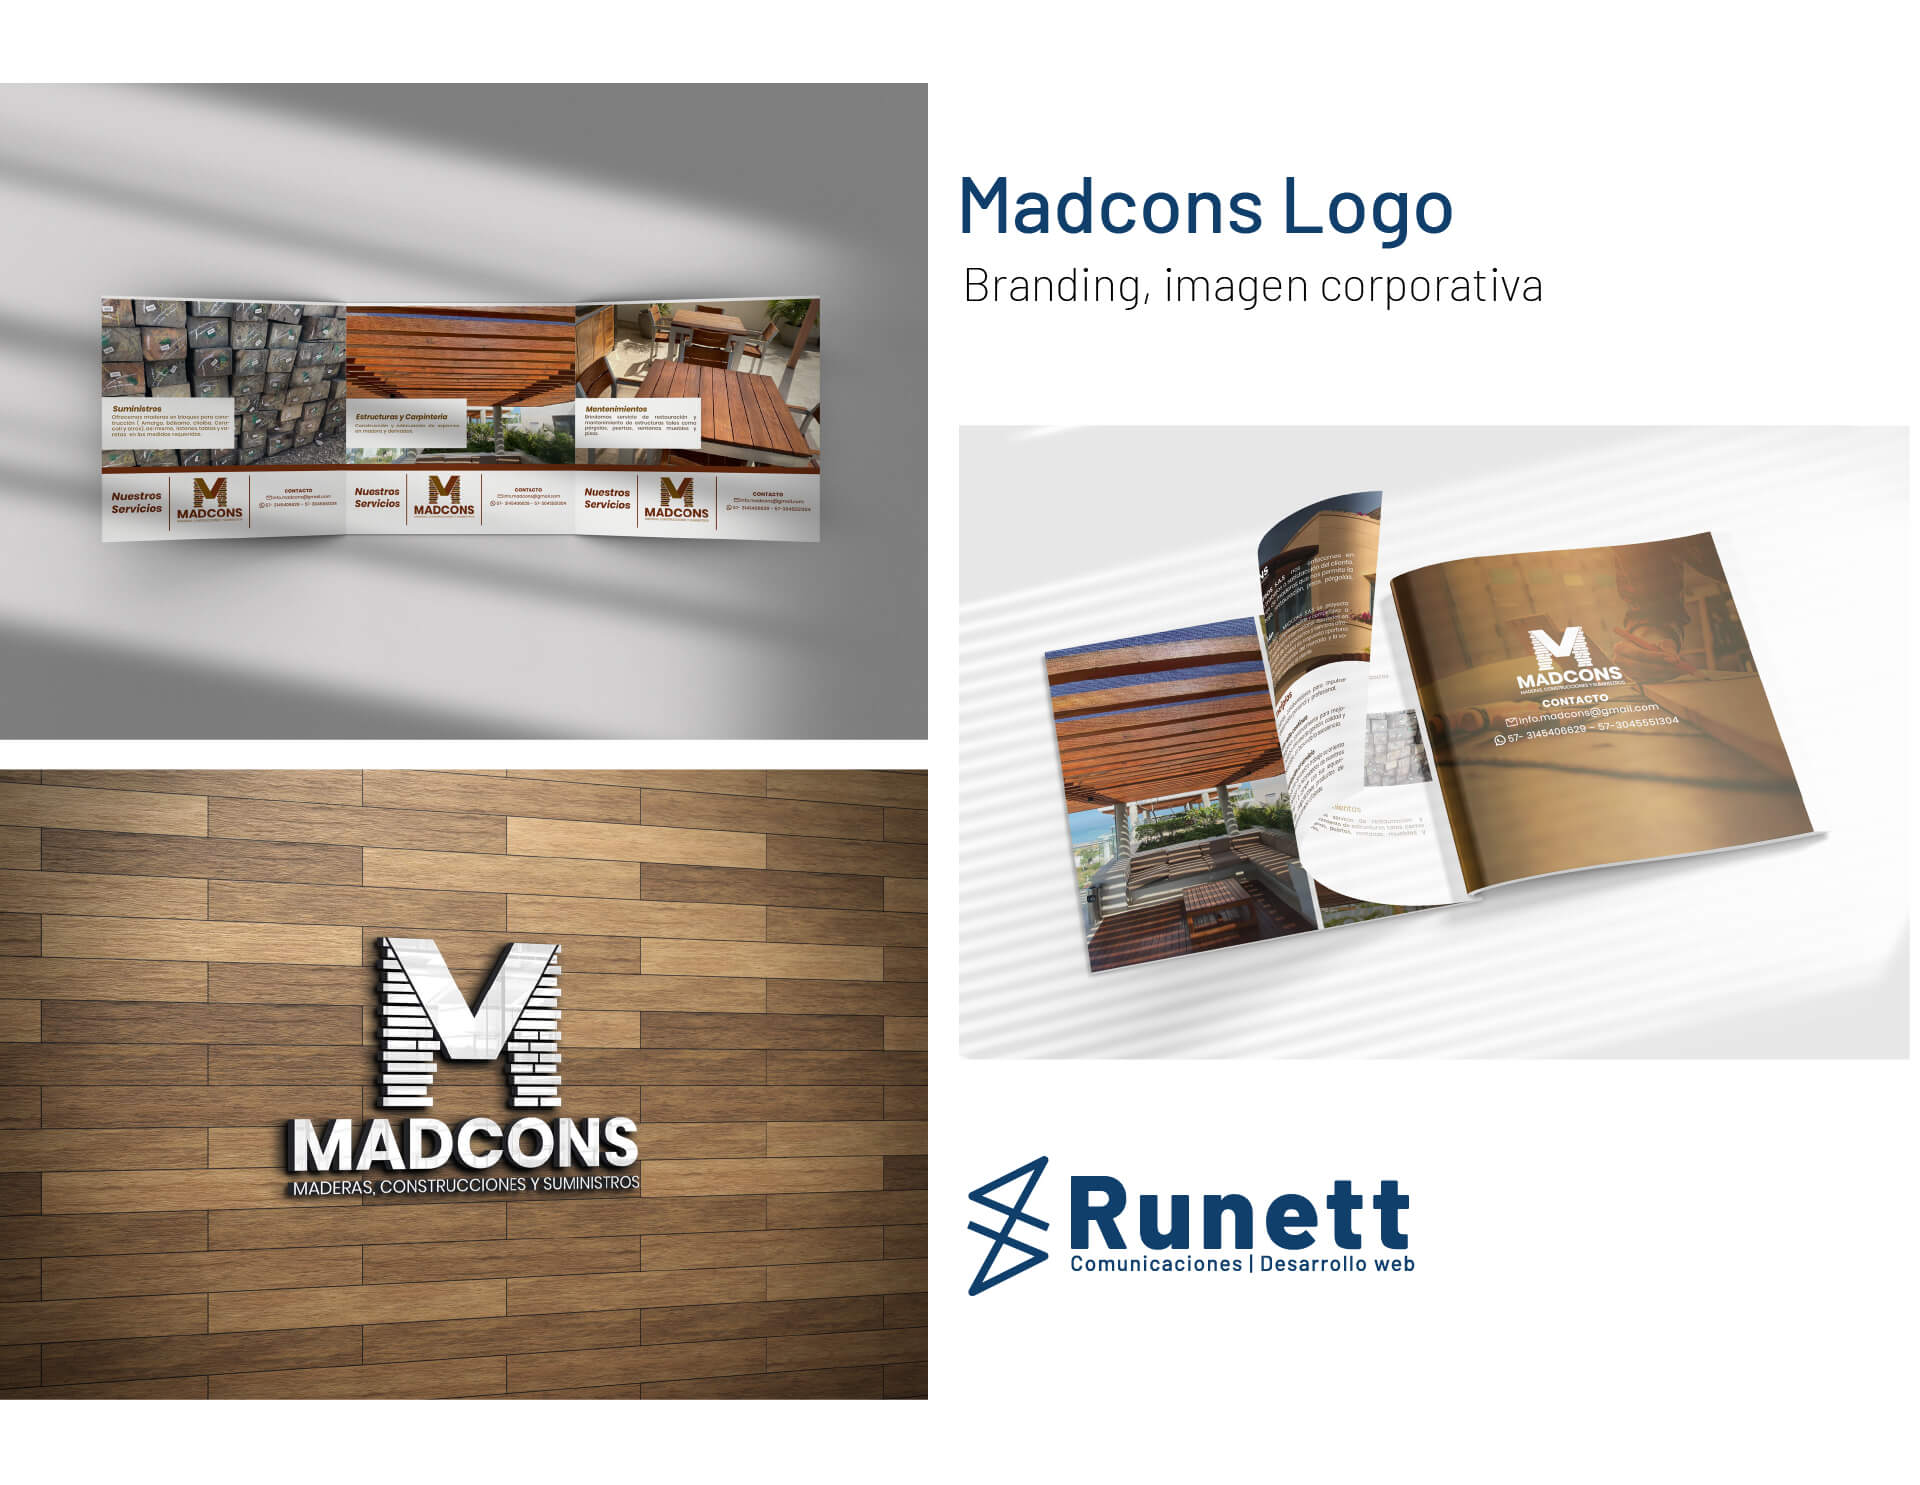 Madcons branding